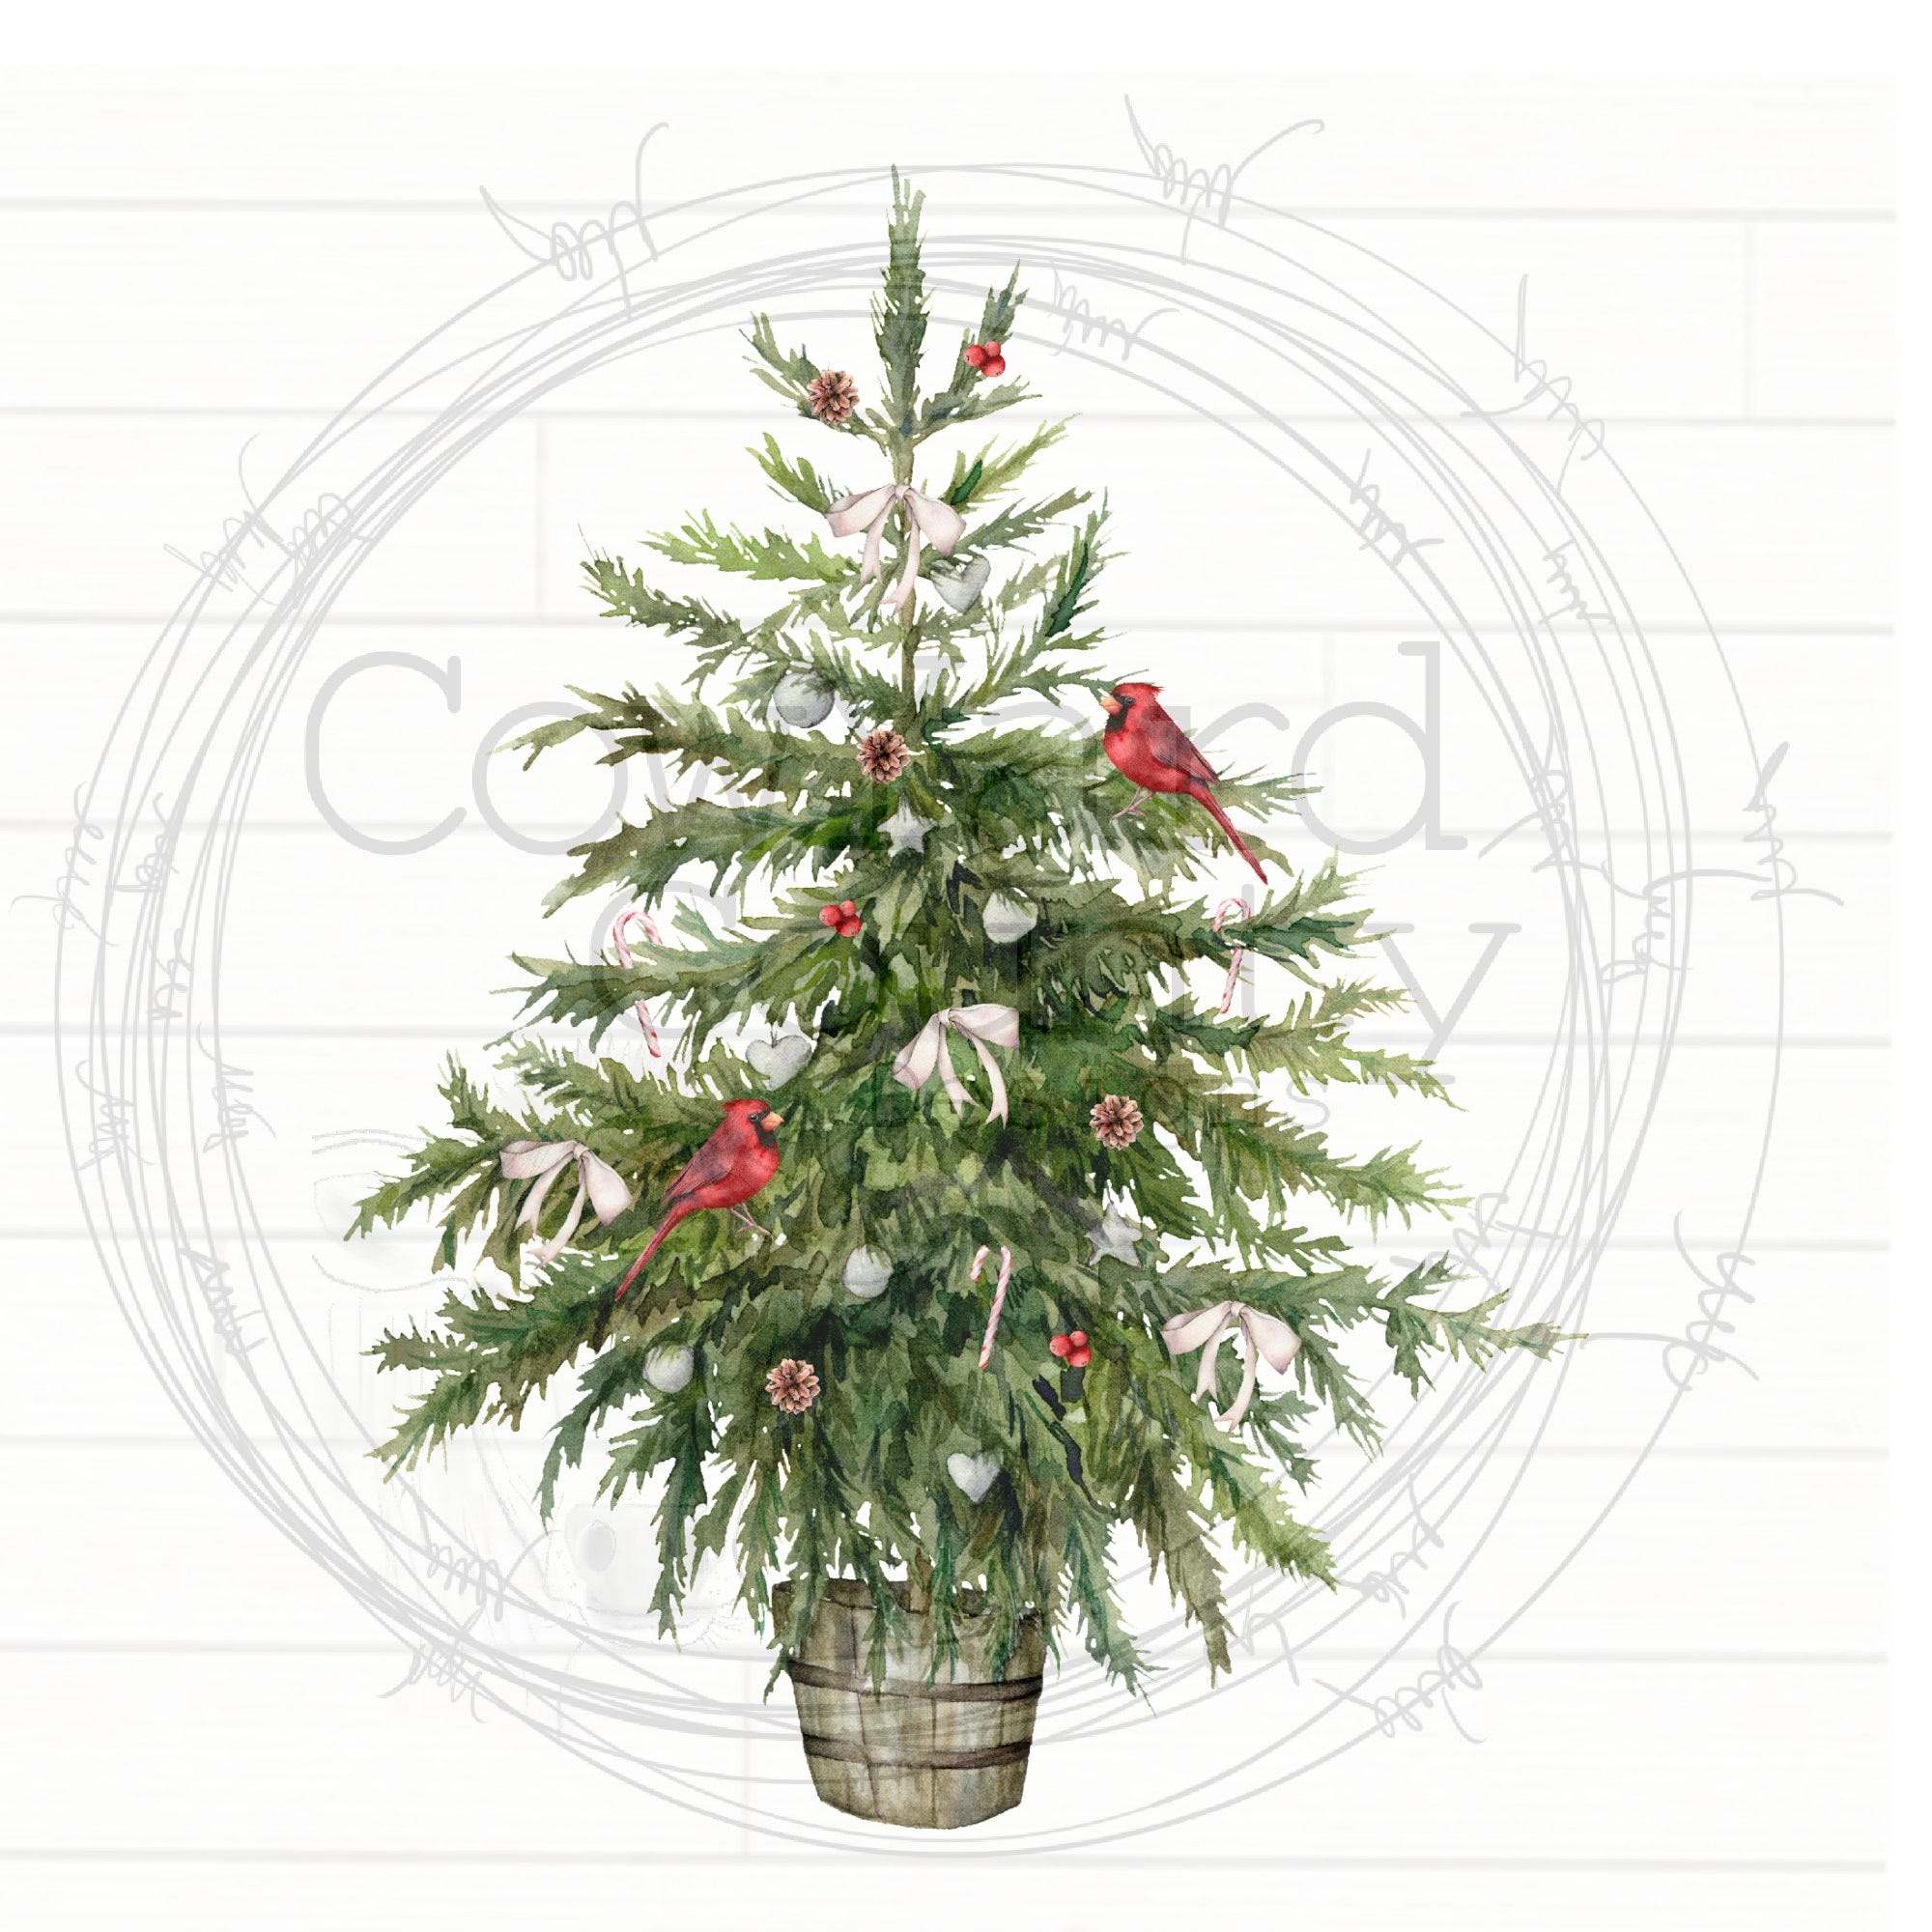 Farmhouse Christmas Tree, Christmas Sublimation, Snowman png, Christmas Designs, Rustic Christmas Designs. Sublimation Designs